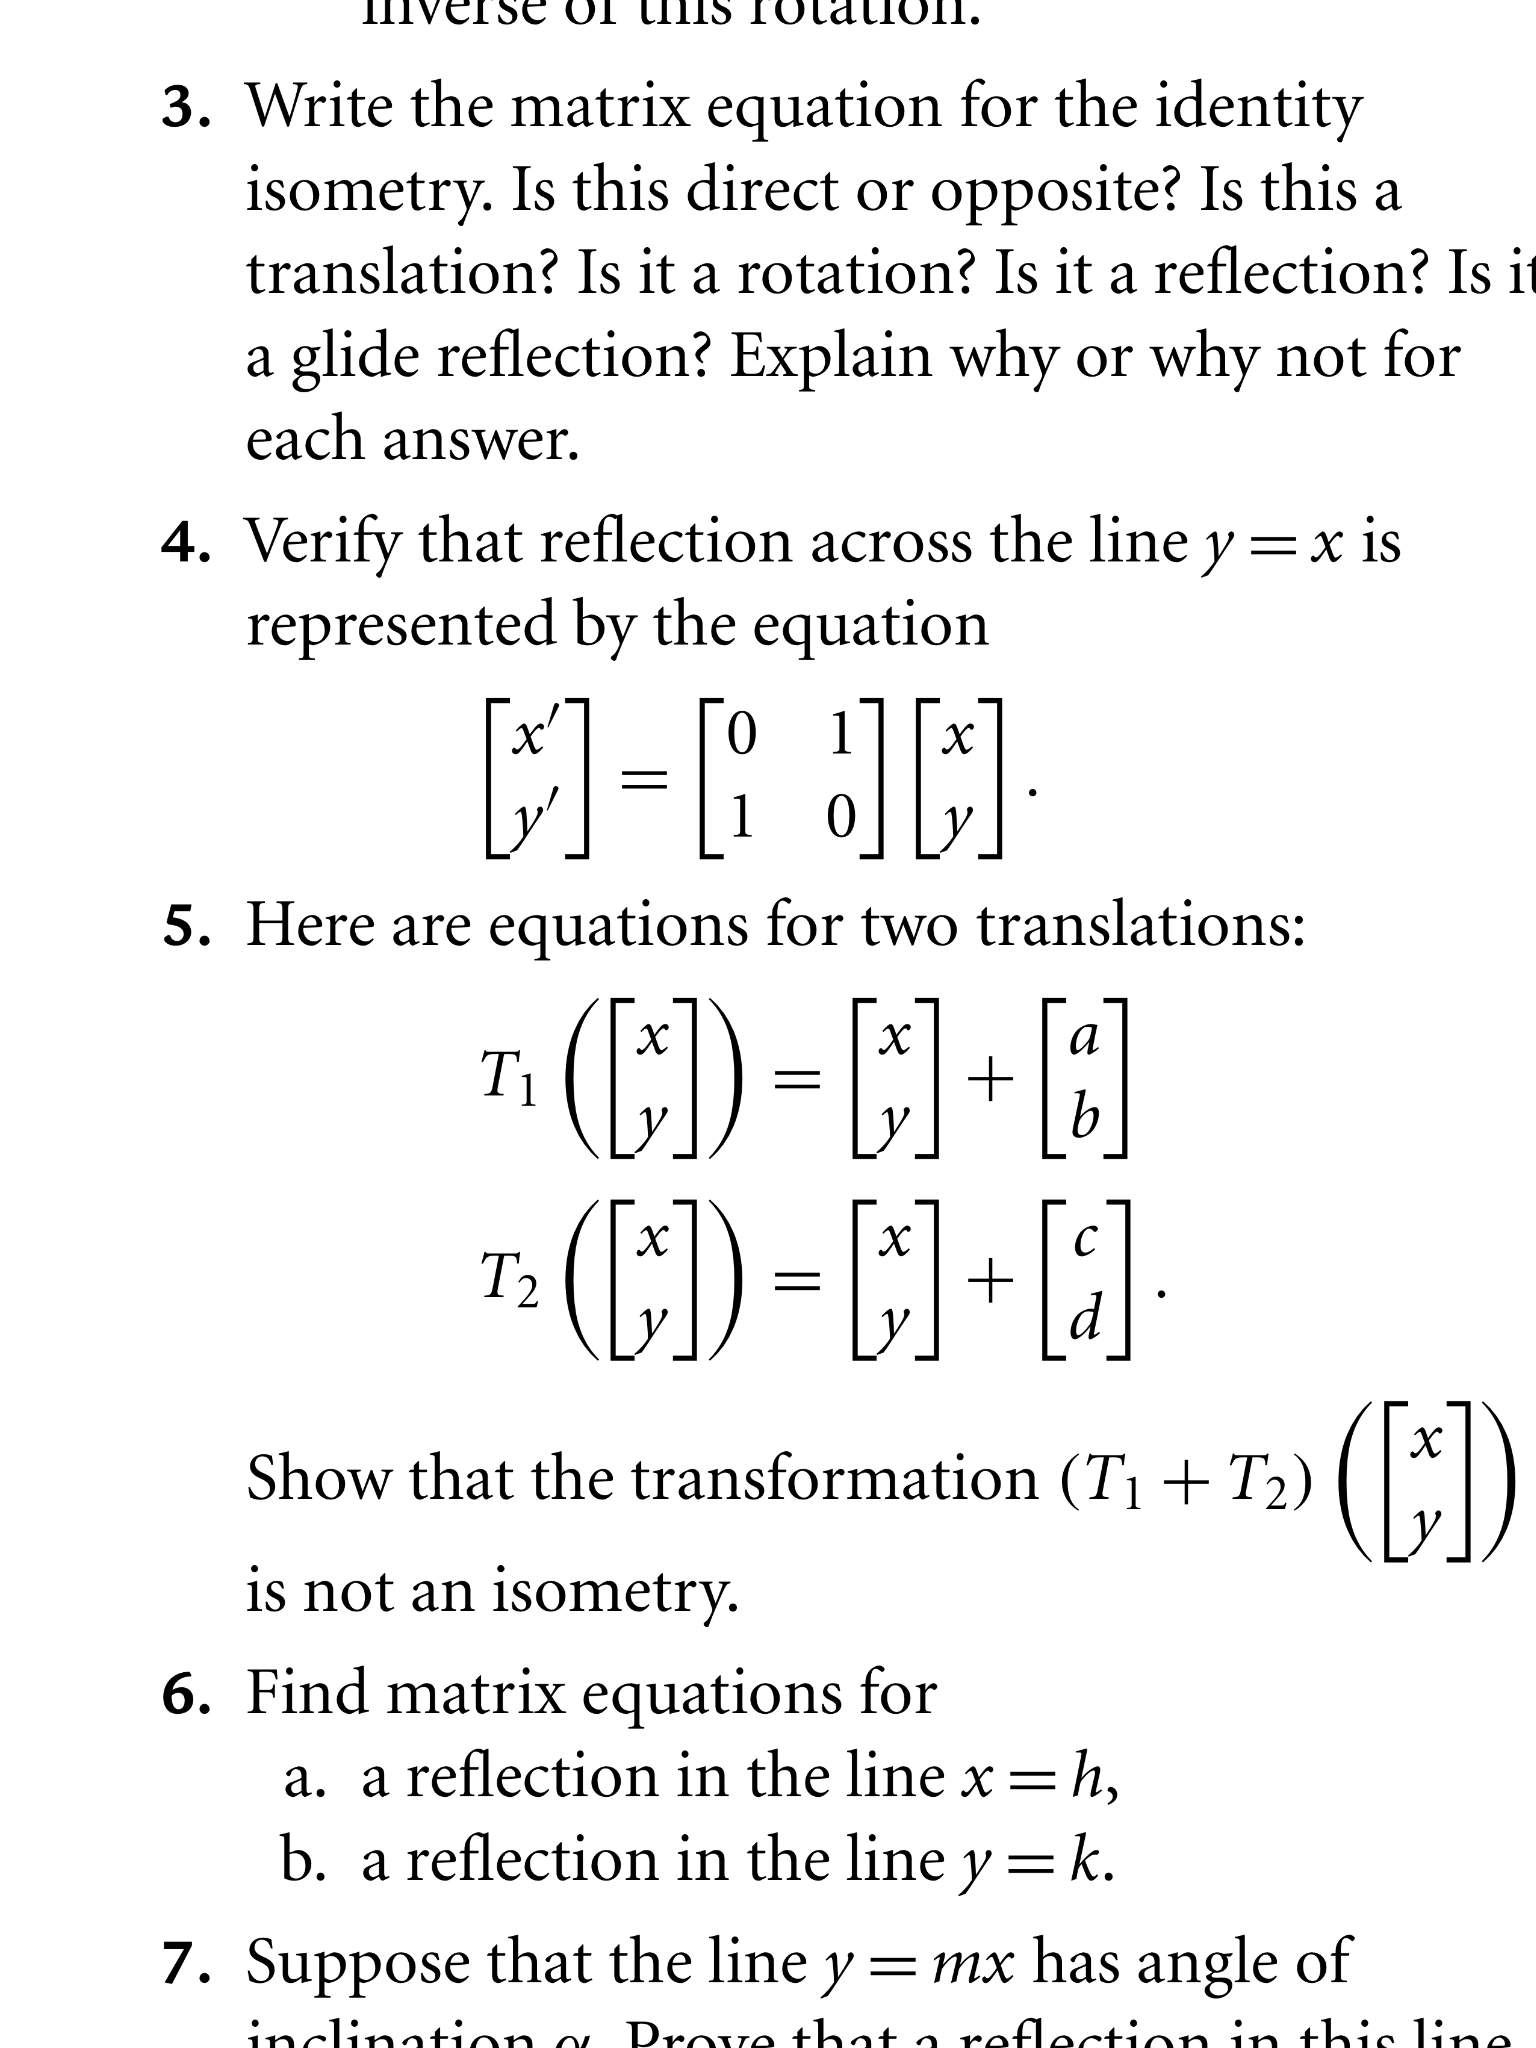 Write The Matrix Equation For The Identity Isometry Chegg Com